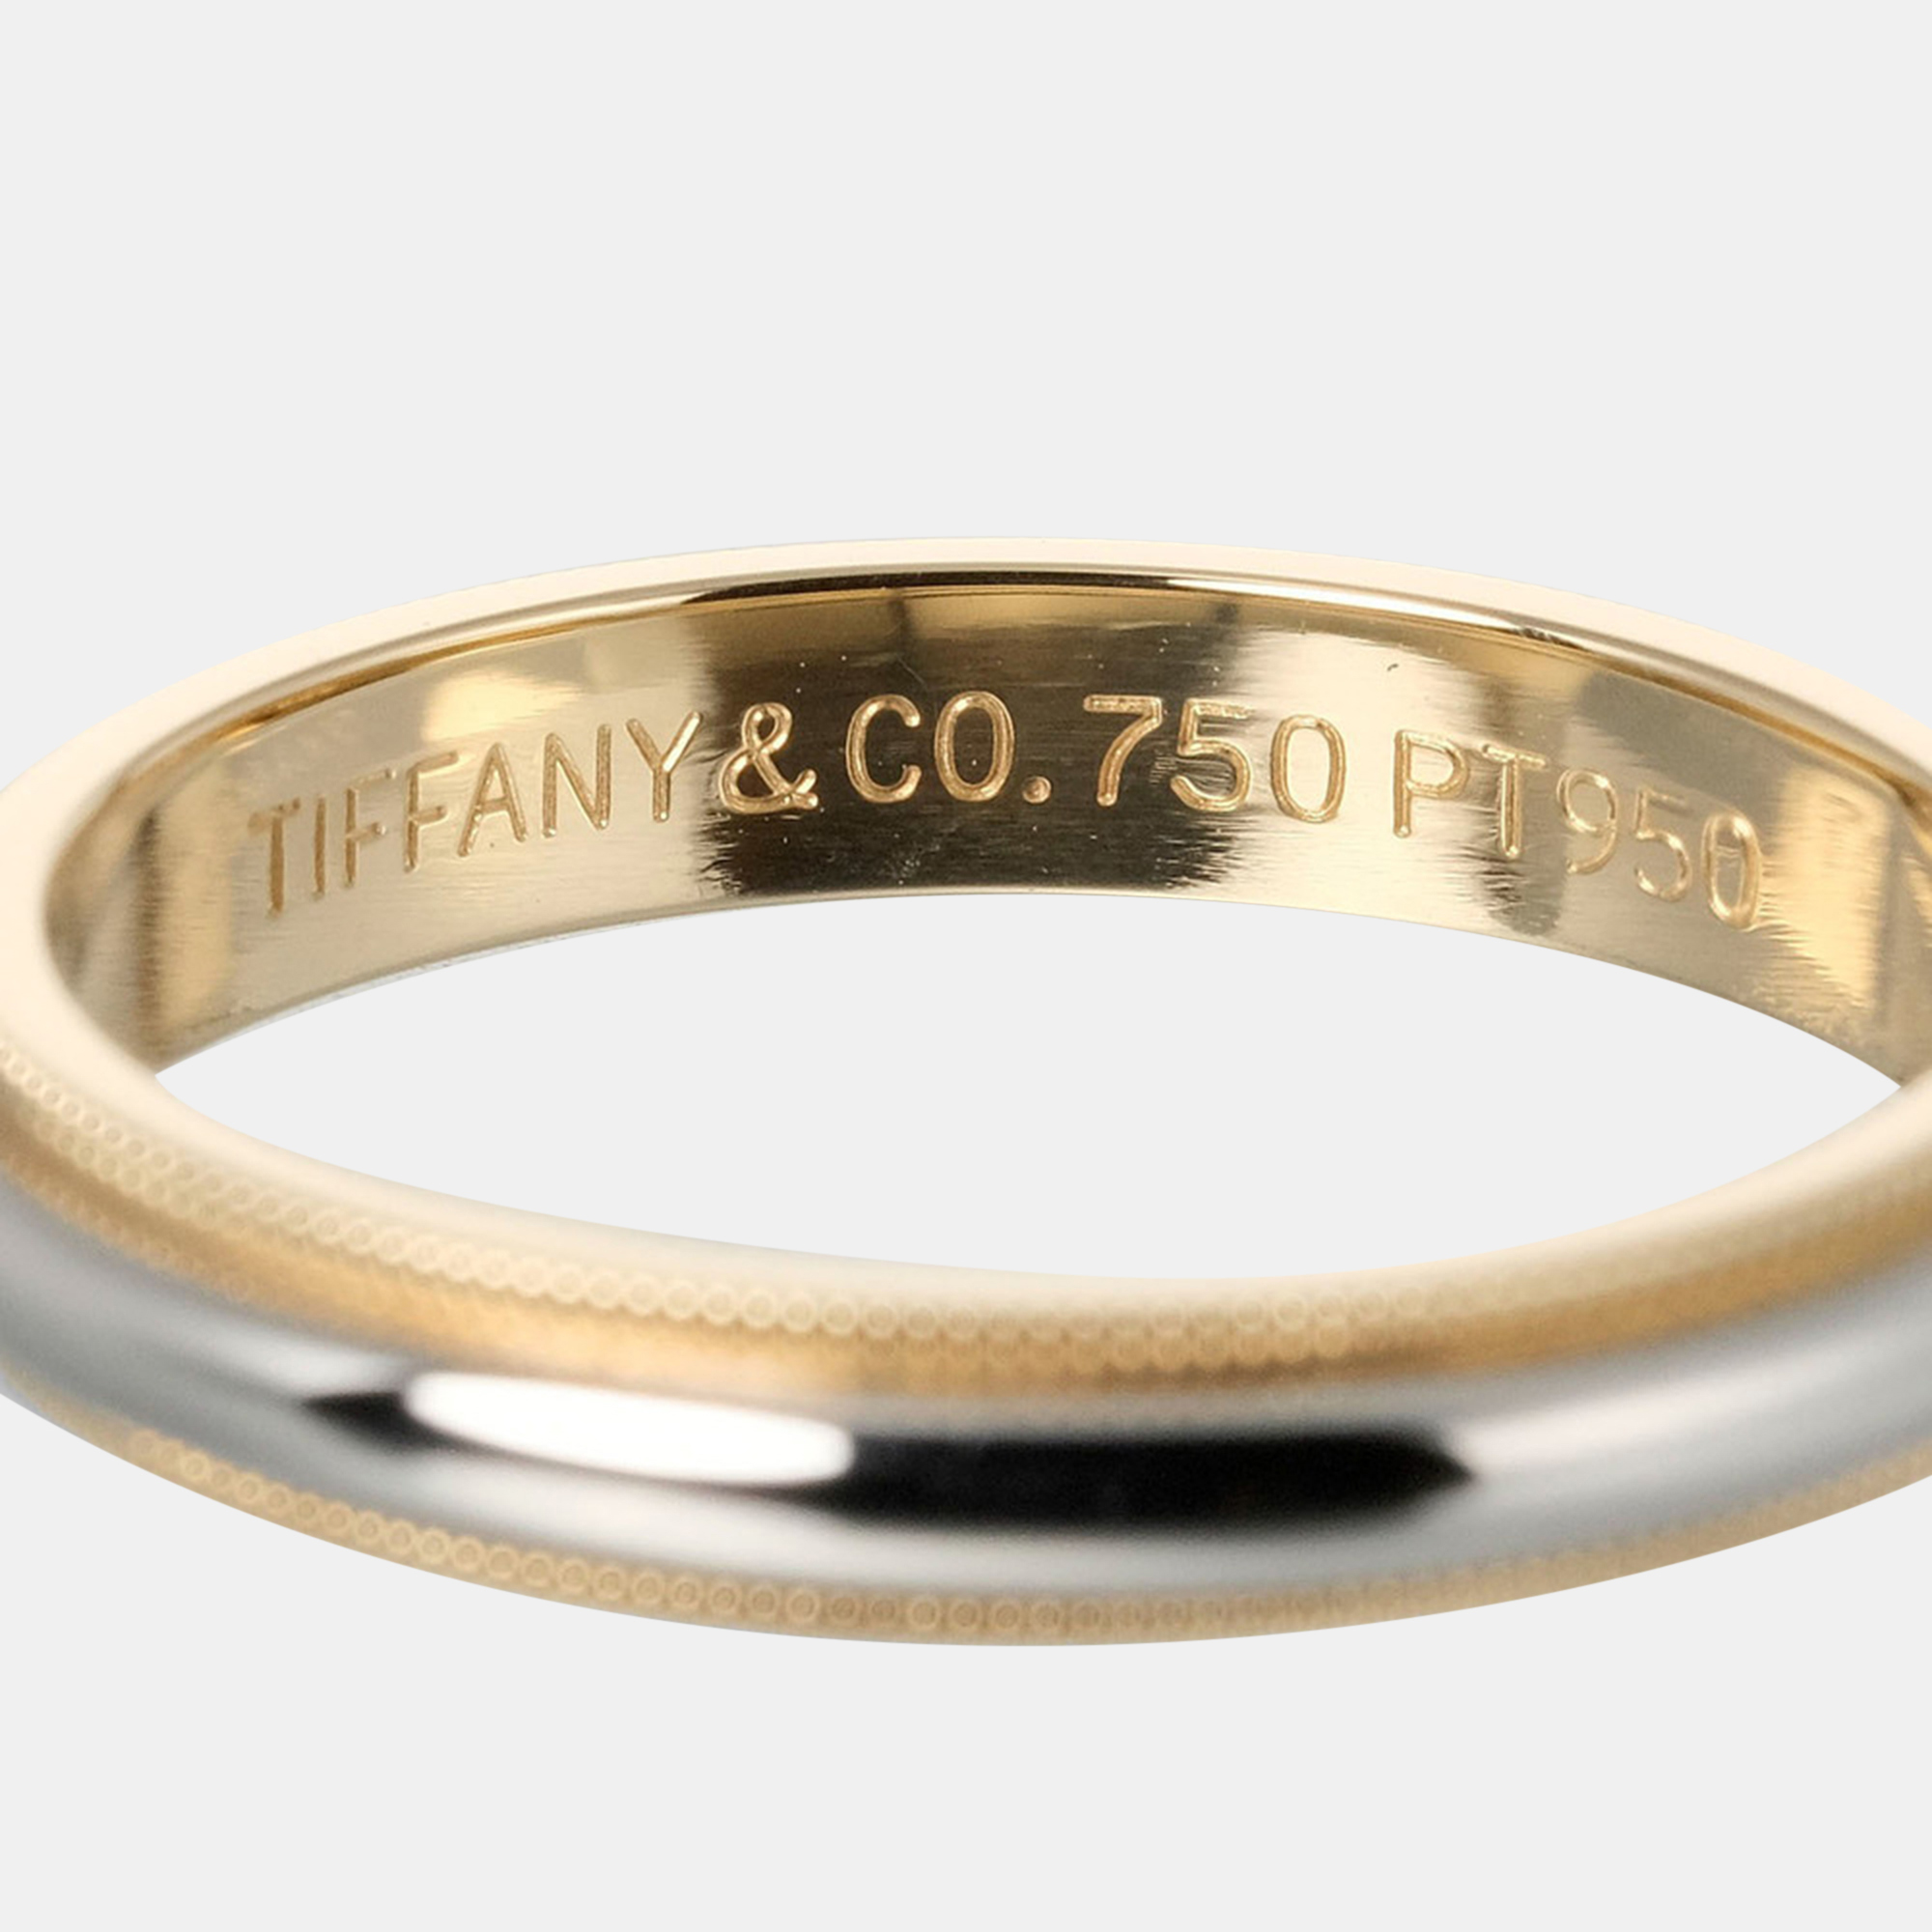 Tiffany & Co. Platinum And 18K Yellow Gold Two-Tone Milgrain Wedding Band Ring EU 61